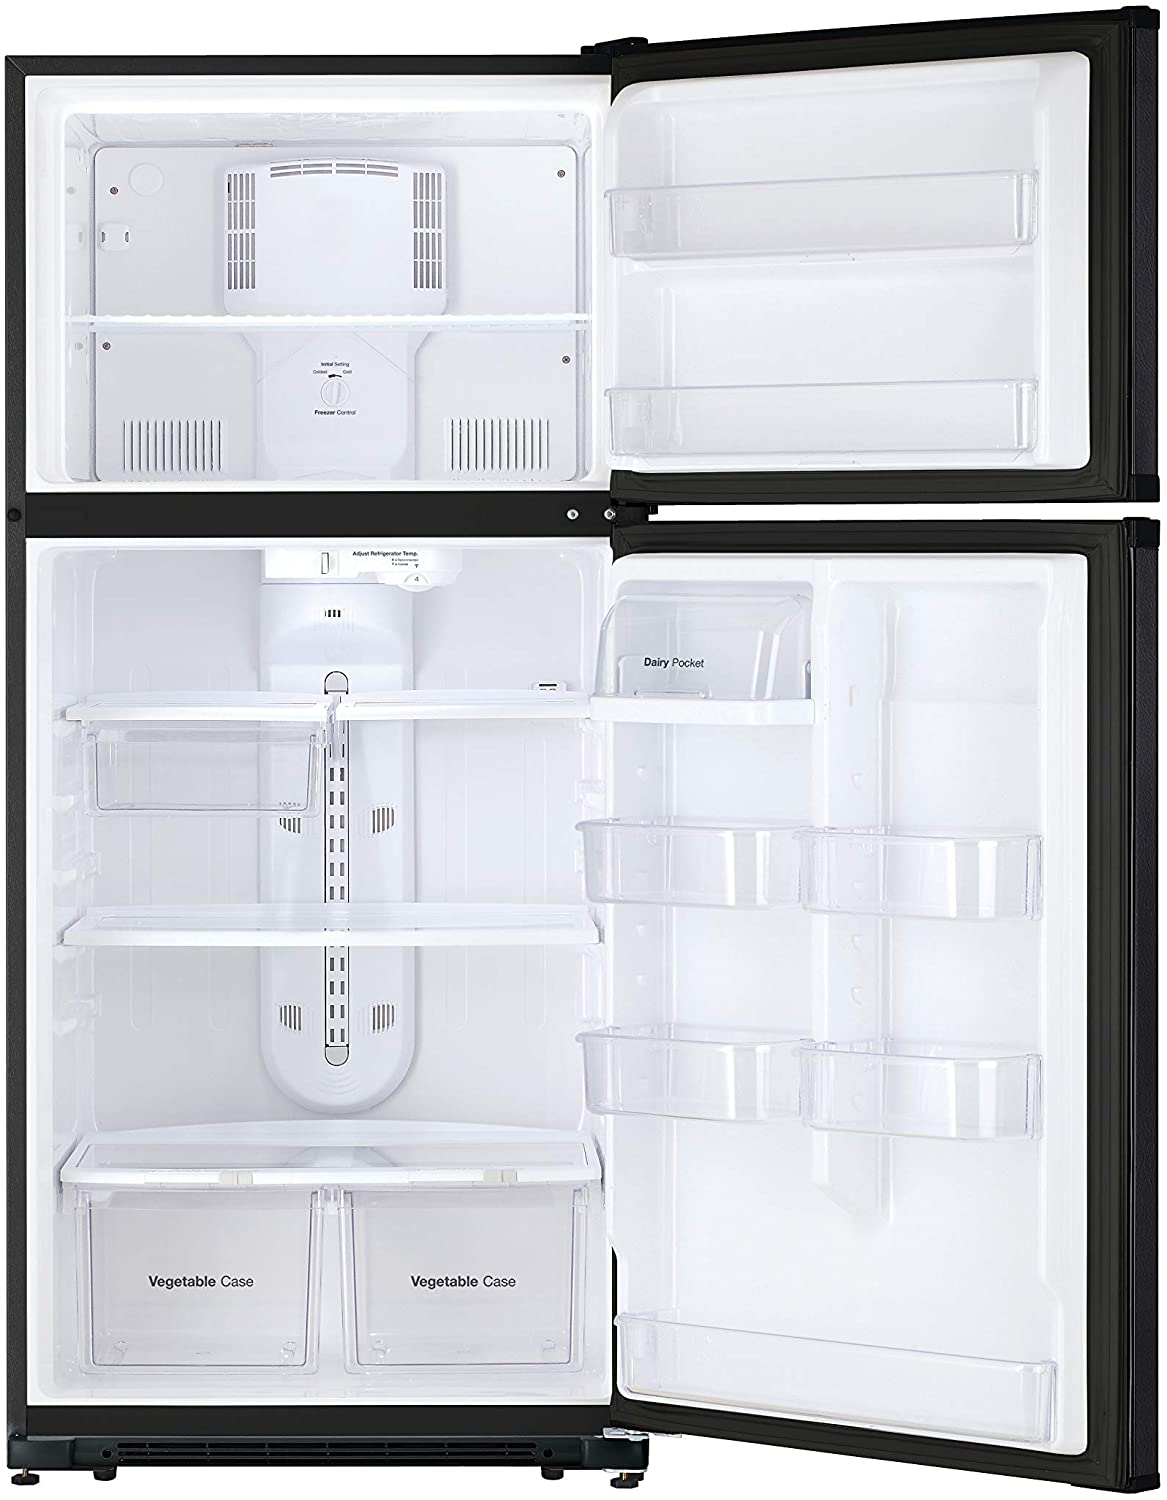 WINIA WTE18HSBCD 18 Cu. Ft. Top Mount Refrigerator Ice Maker Ready Specs